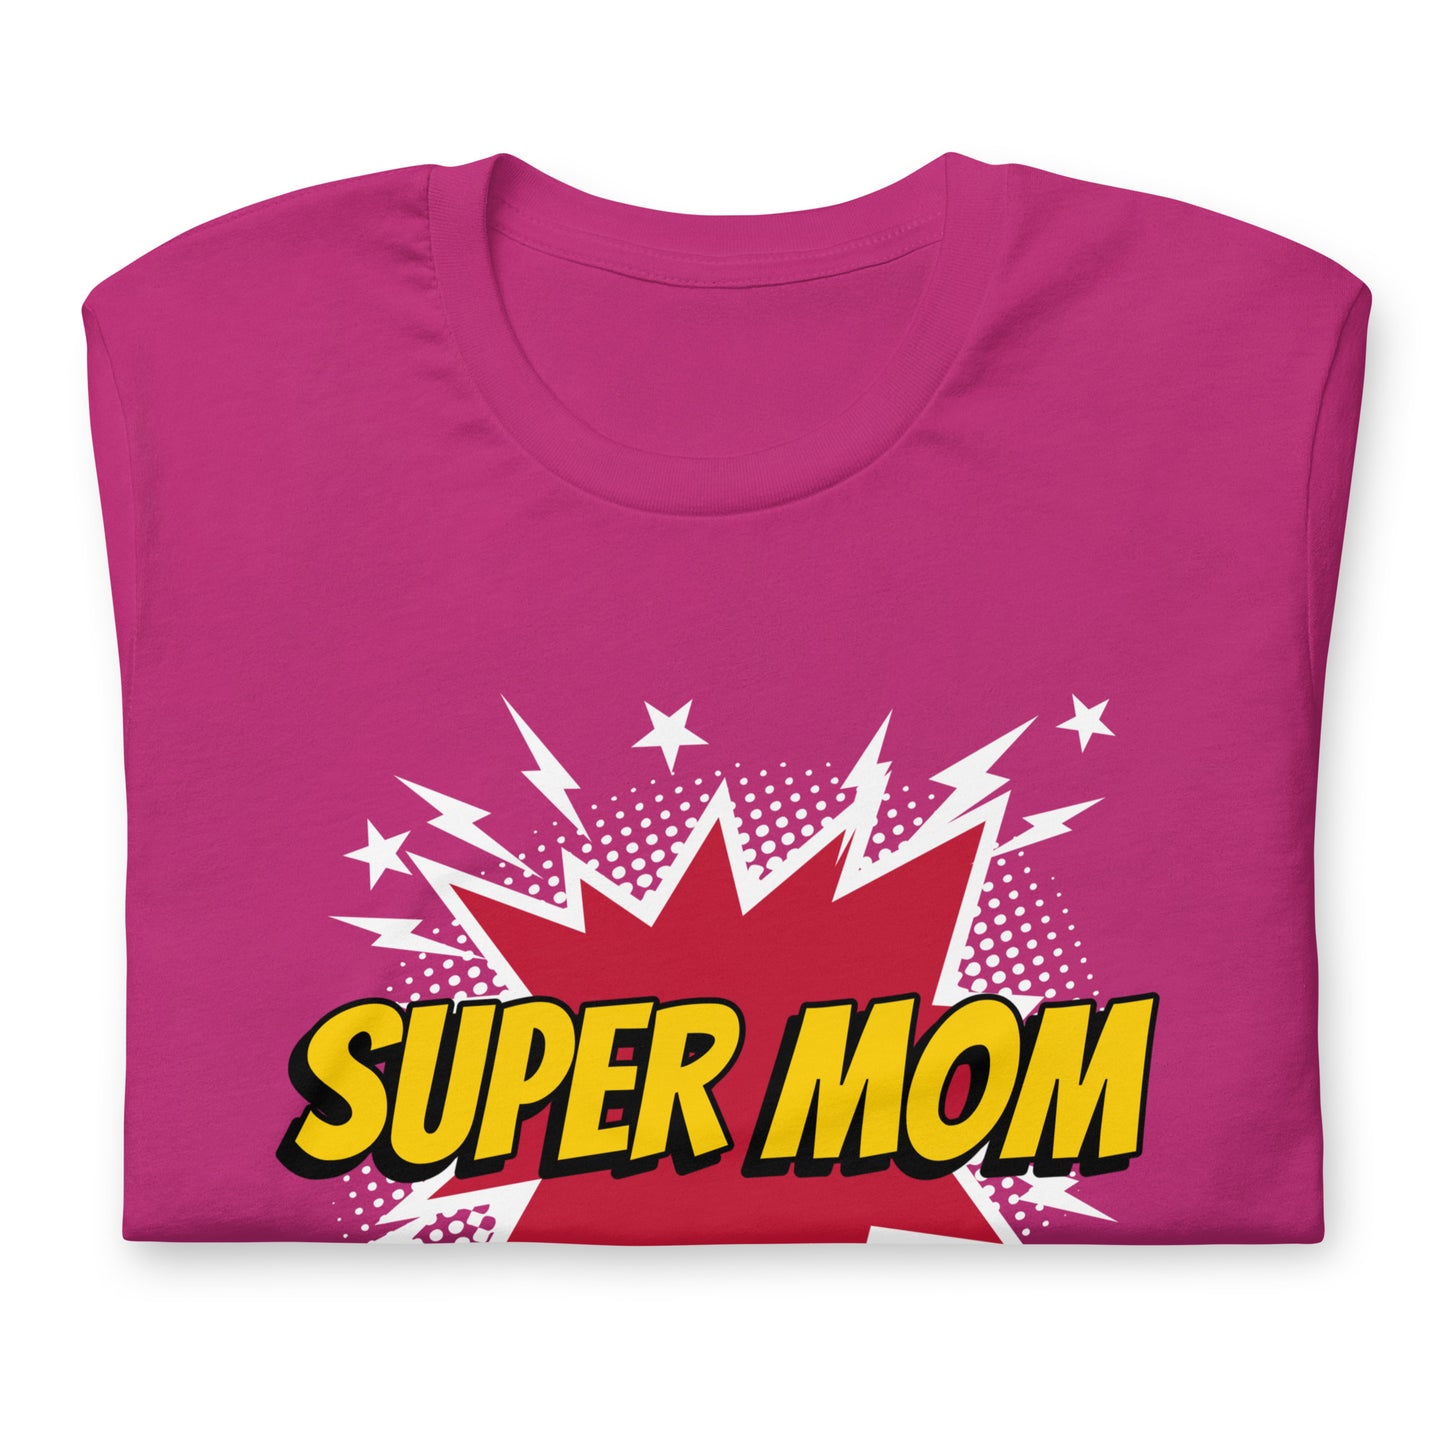 SUPER MOM Adult T-Shirt